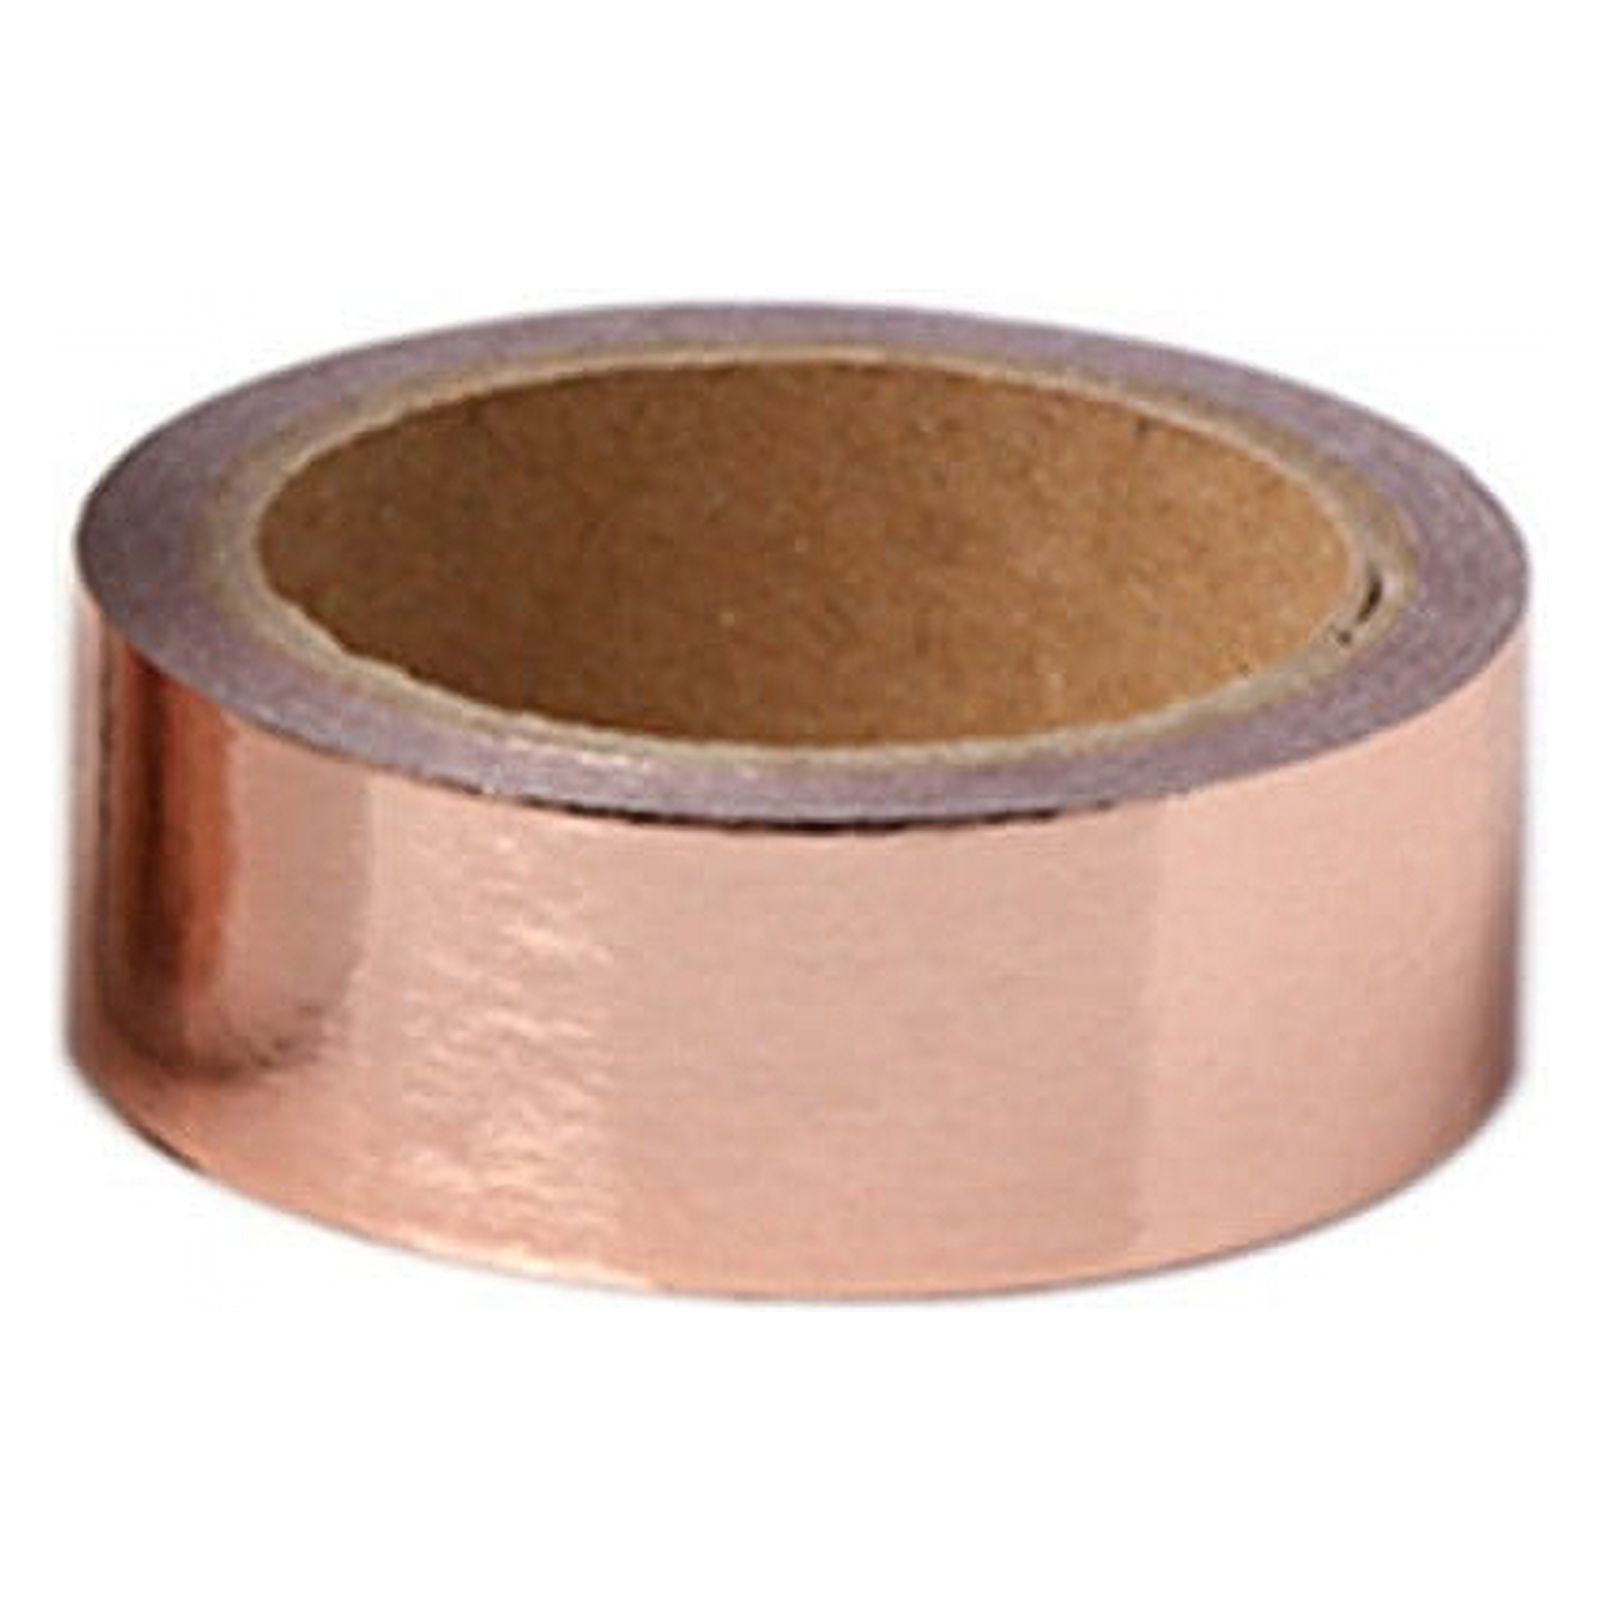 15mm*10m Gold Foil Washi Tape Silver/Gold/Copper/Rose/Green Color